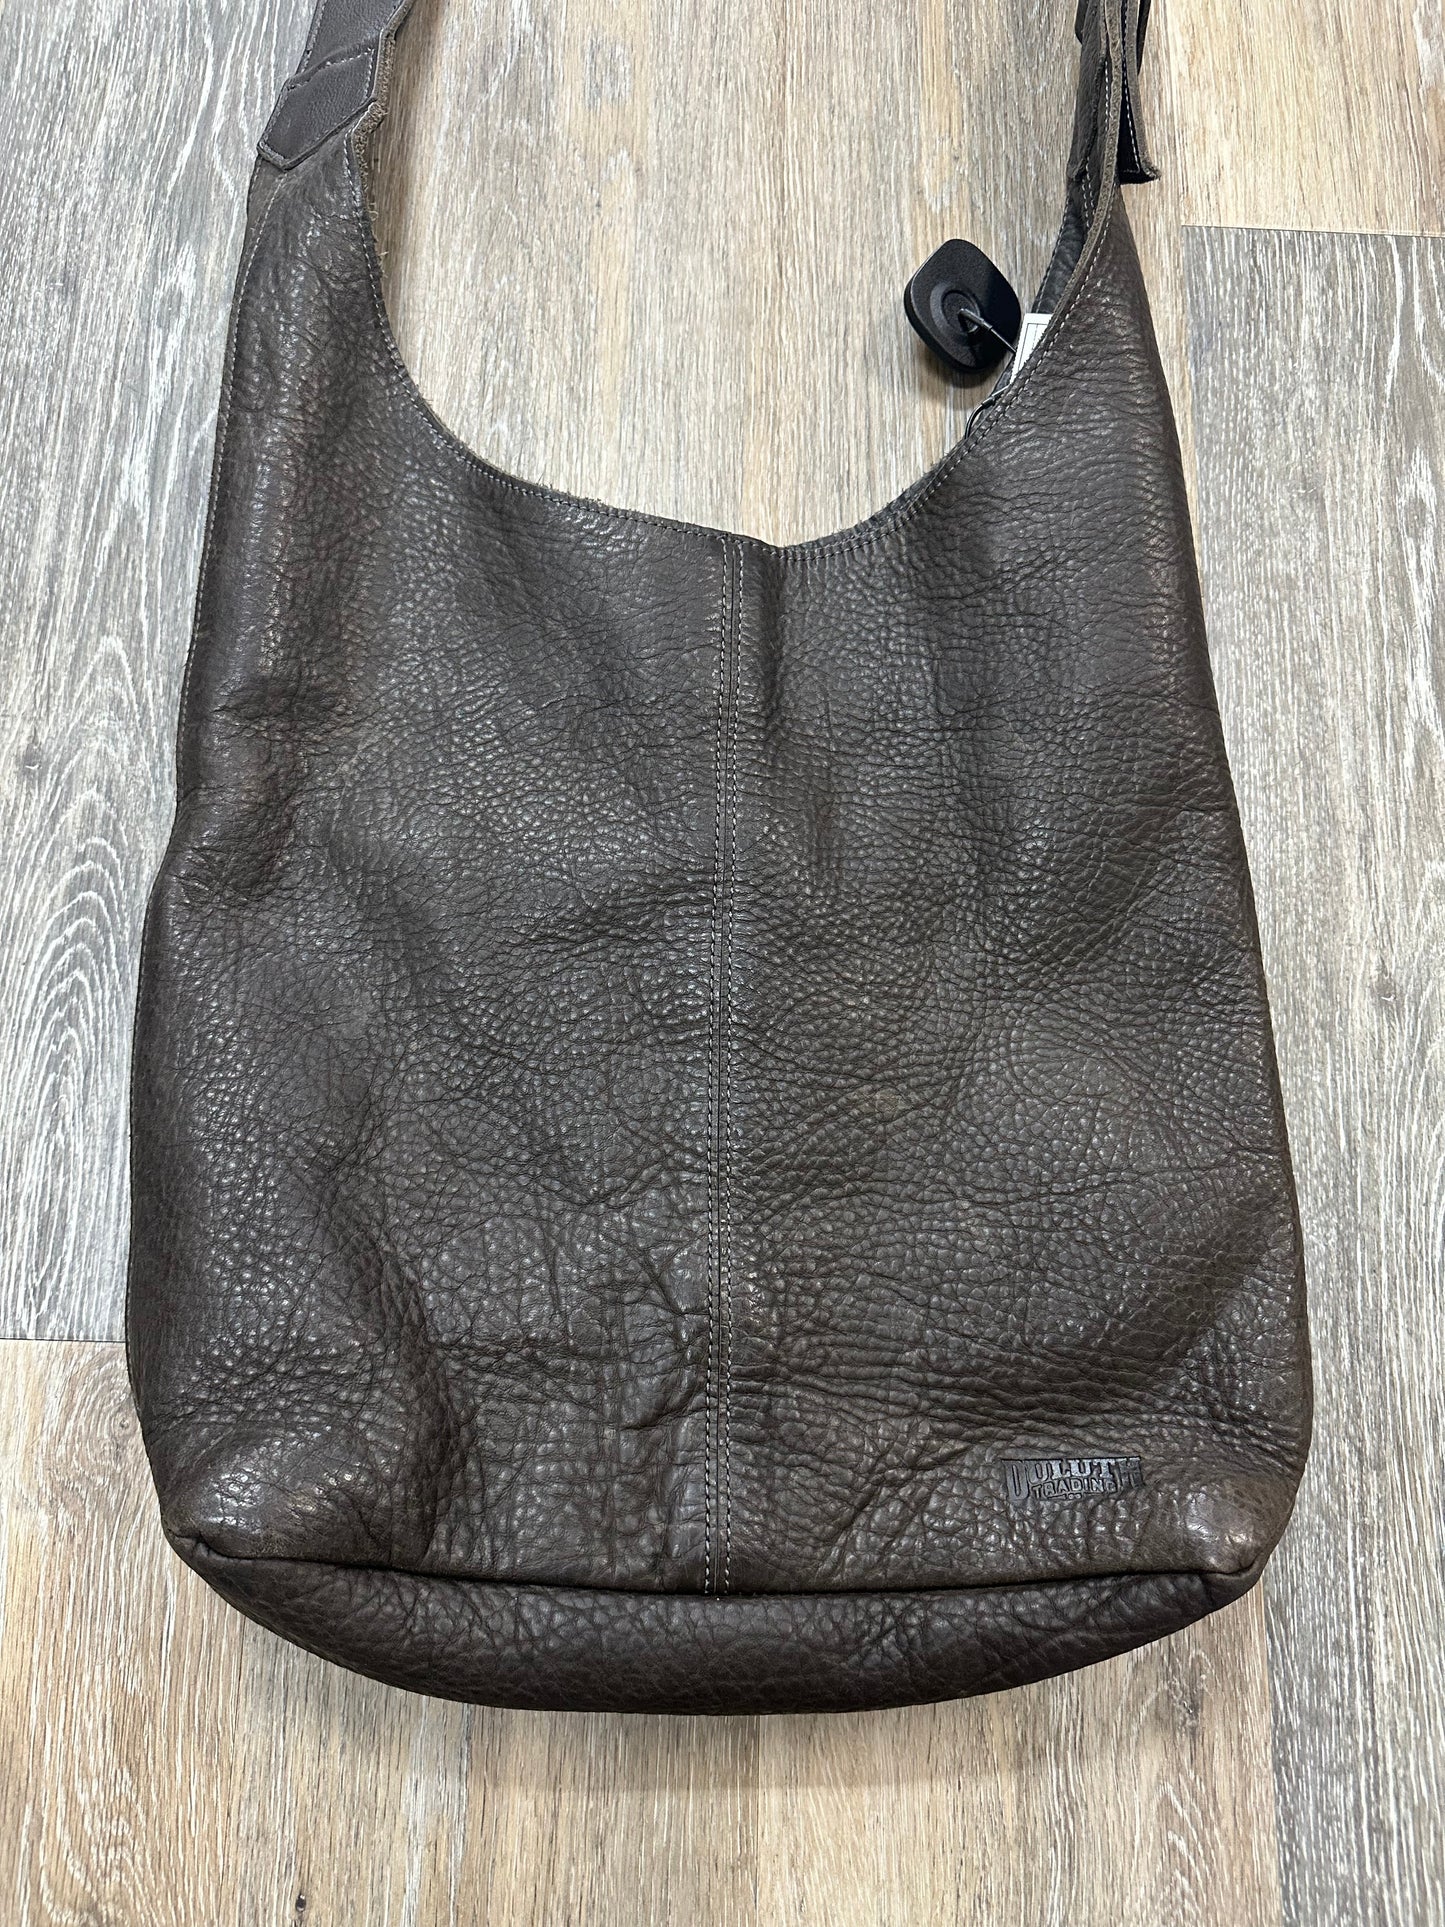 Handbag Leather By Duluth Trading  Size: Large